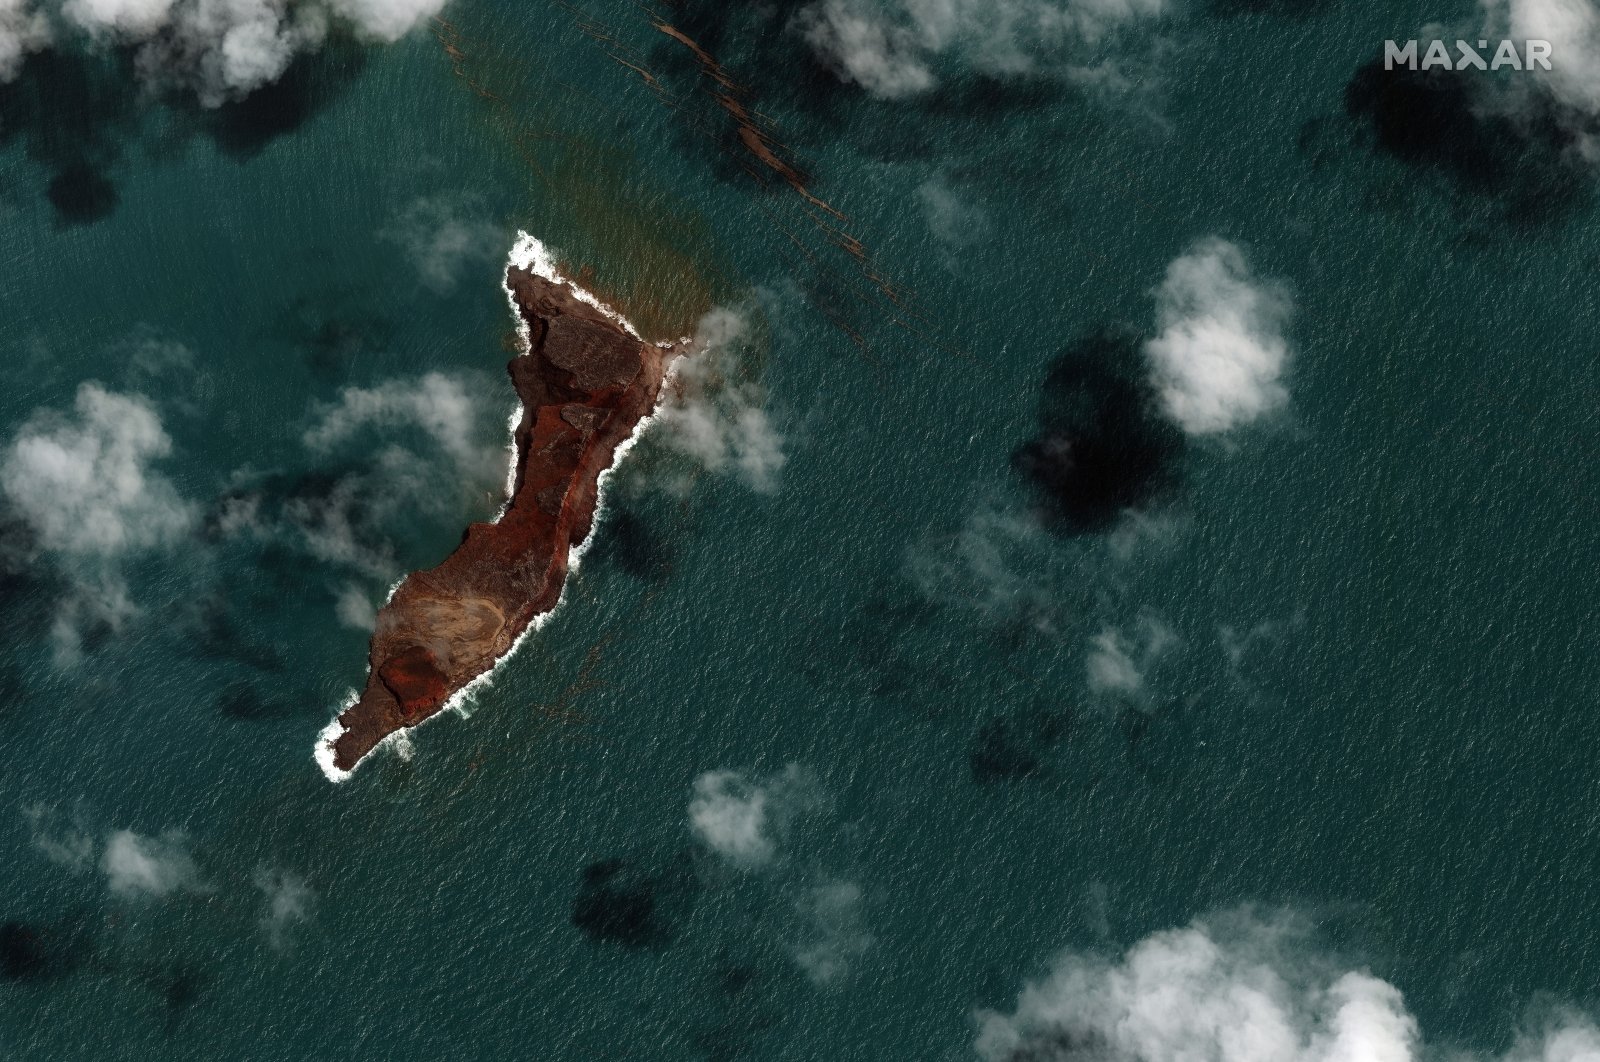 Abu vulkanik menghambat upaya bantuan Tonga karena penerbangan dibatalkan